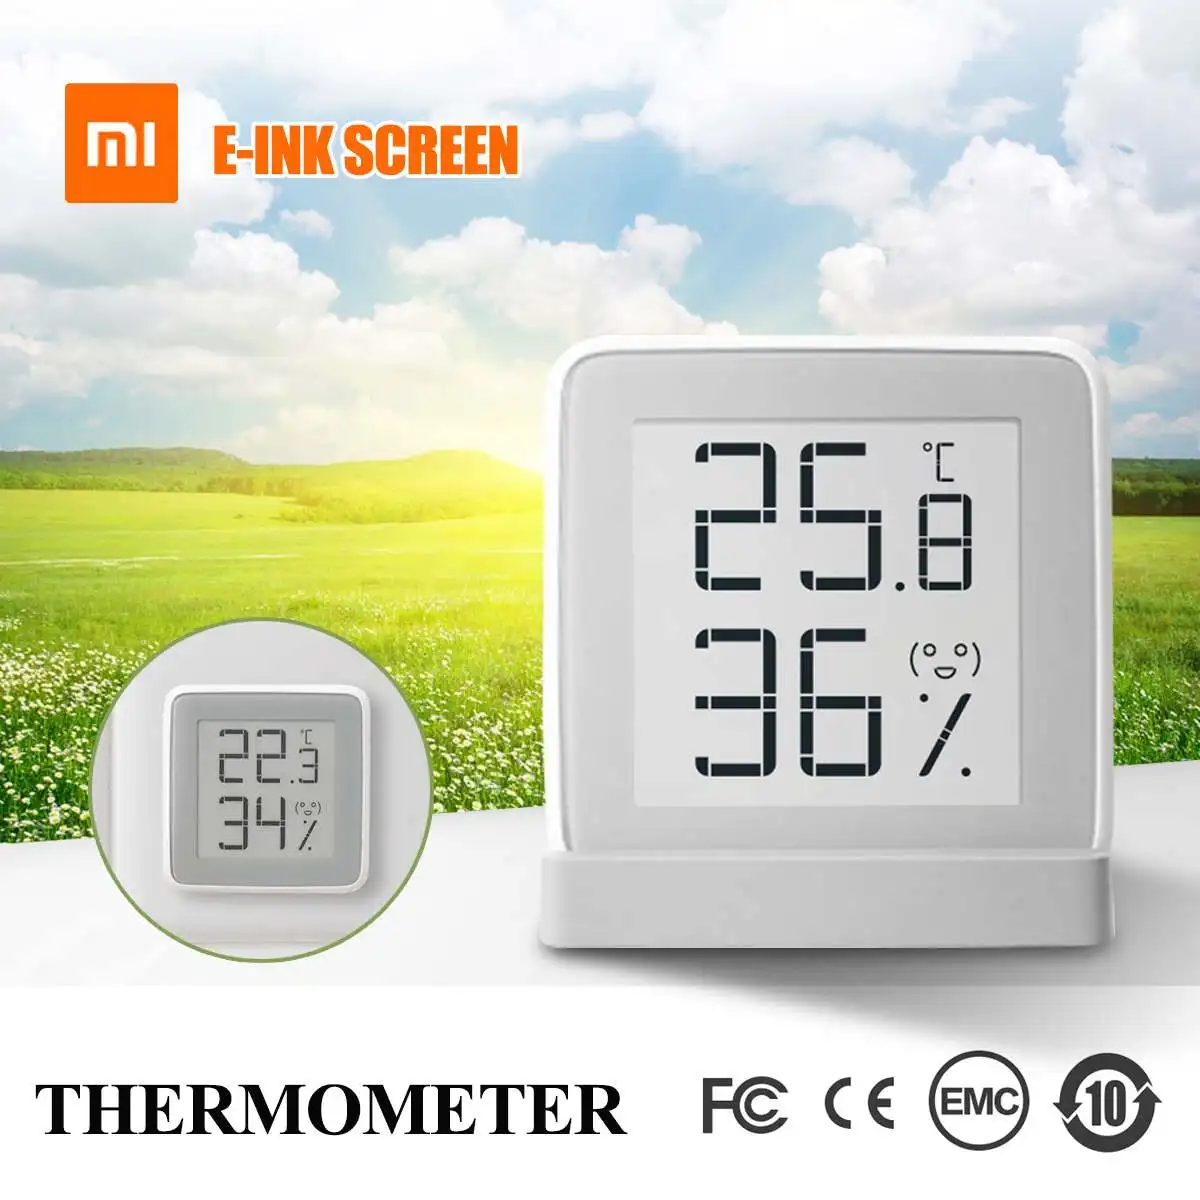 

Mijia MiaoMiaoCe E-Link INK Screen Display Digital Moisture Meter High-Precision Thermometer Temperature Humidity Sensor